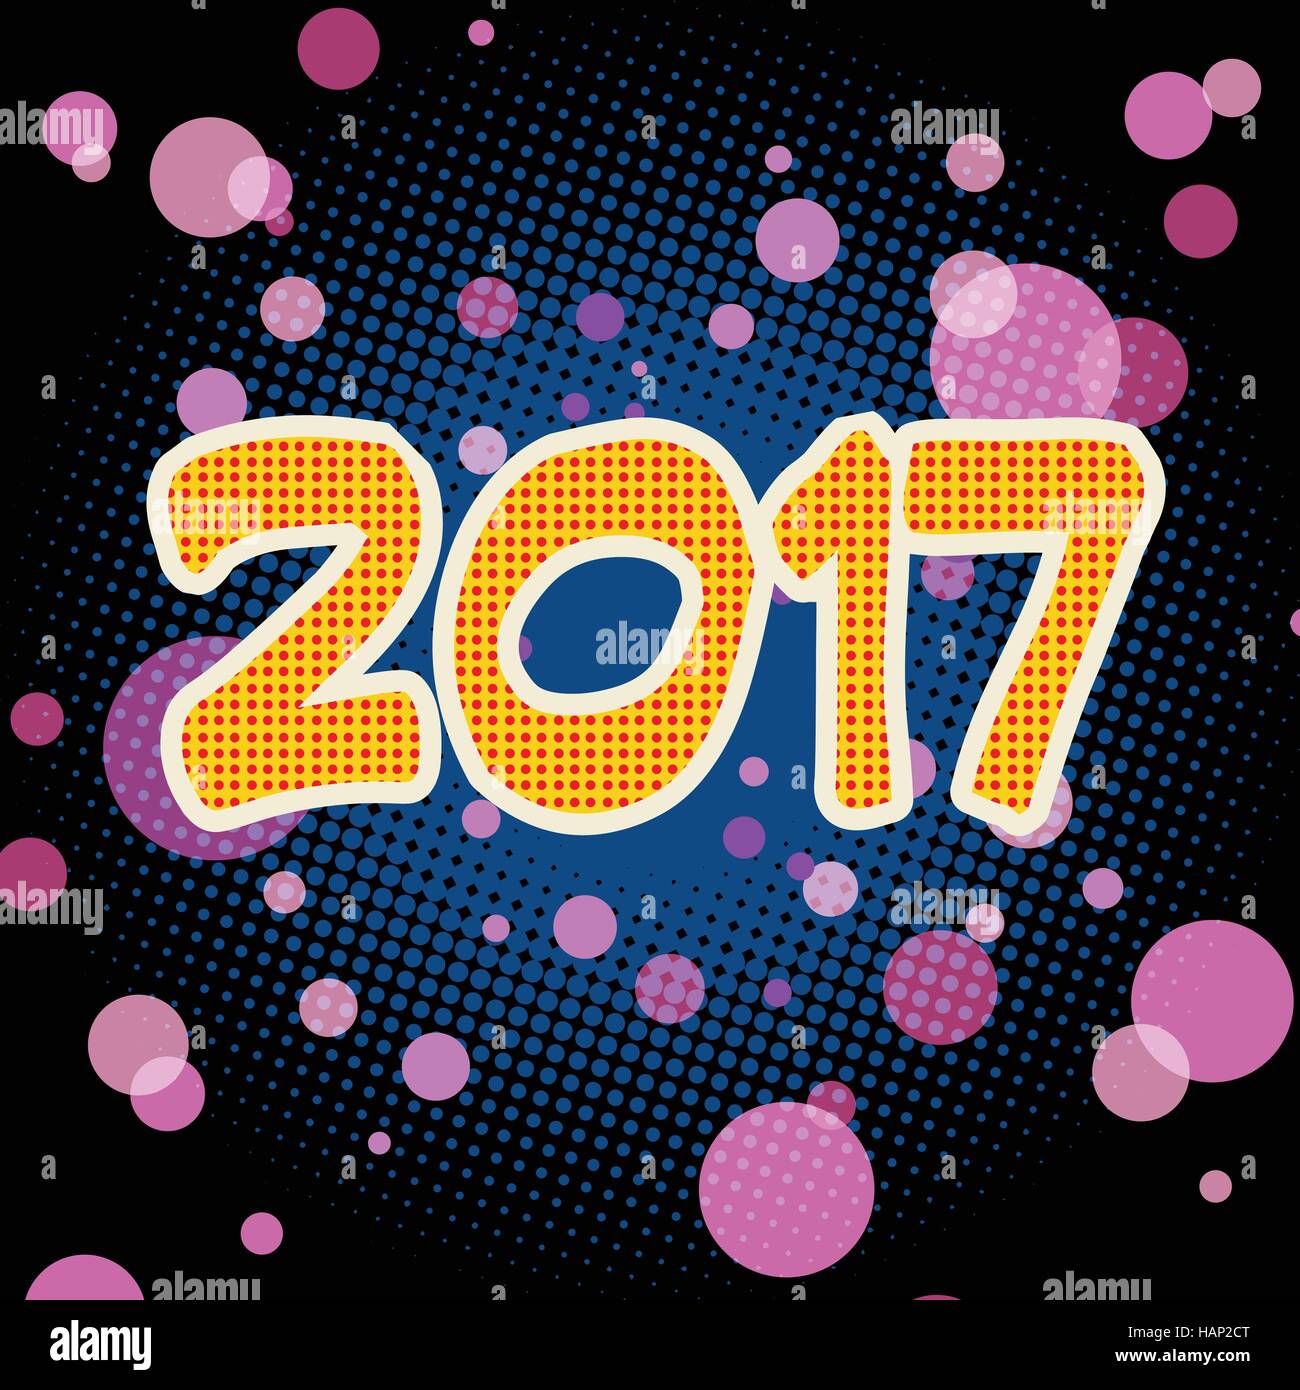 New year 2017 pop art background Stock Vector